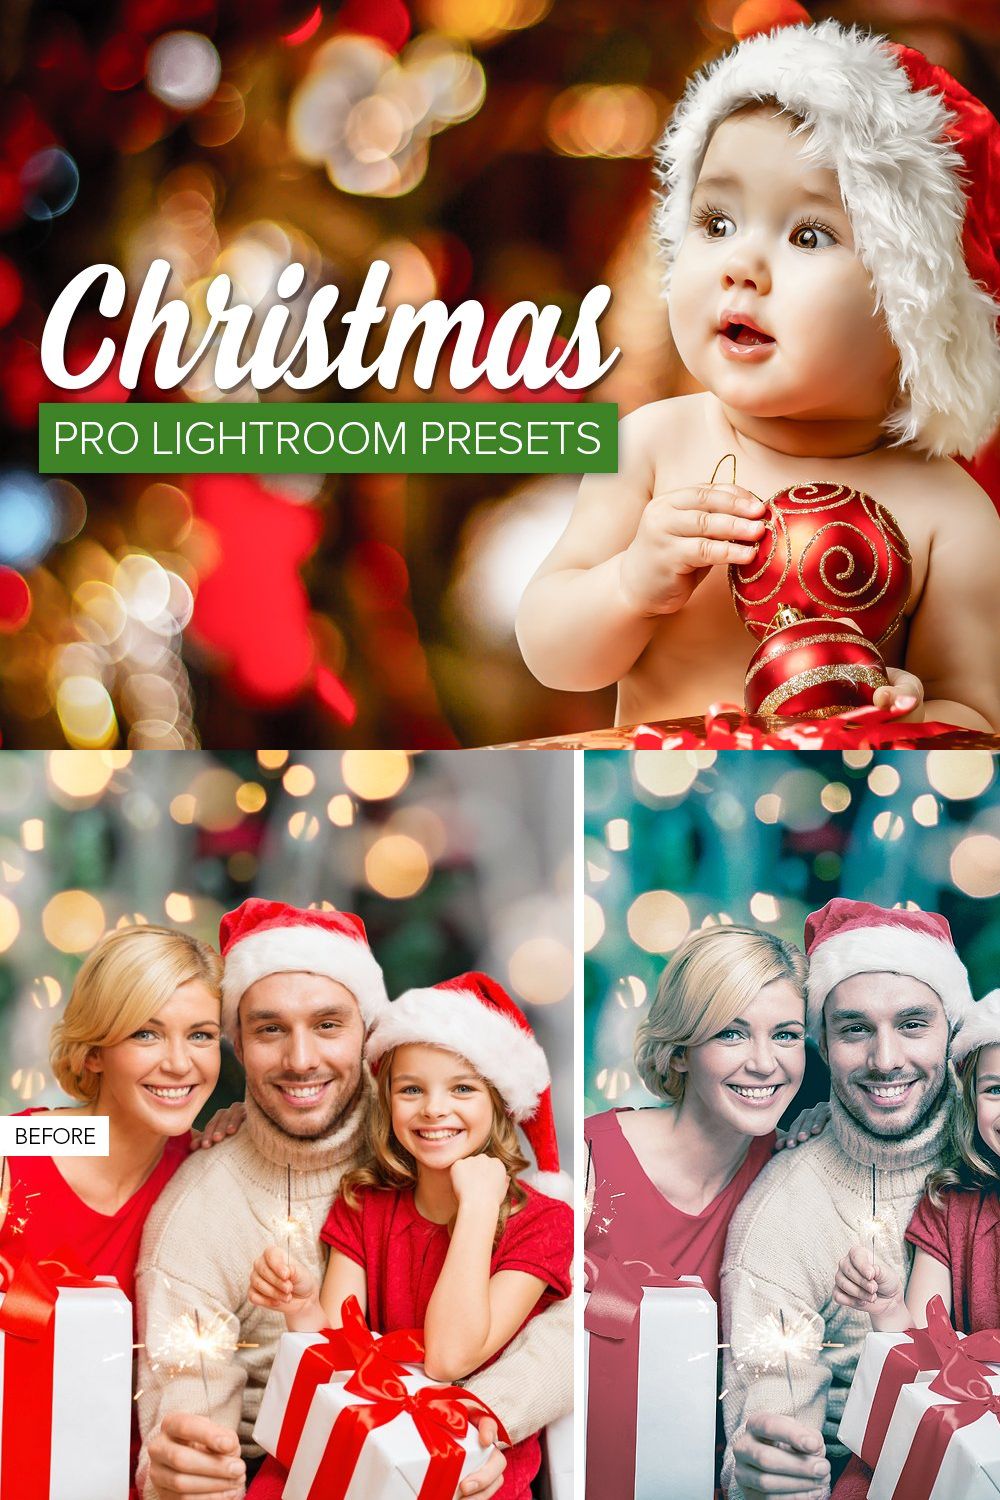 Christmas Lightroom Presets pinterest preview image.